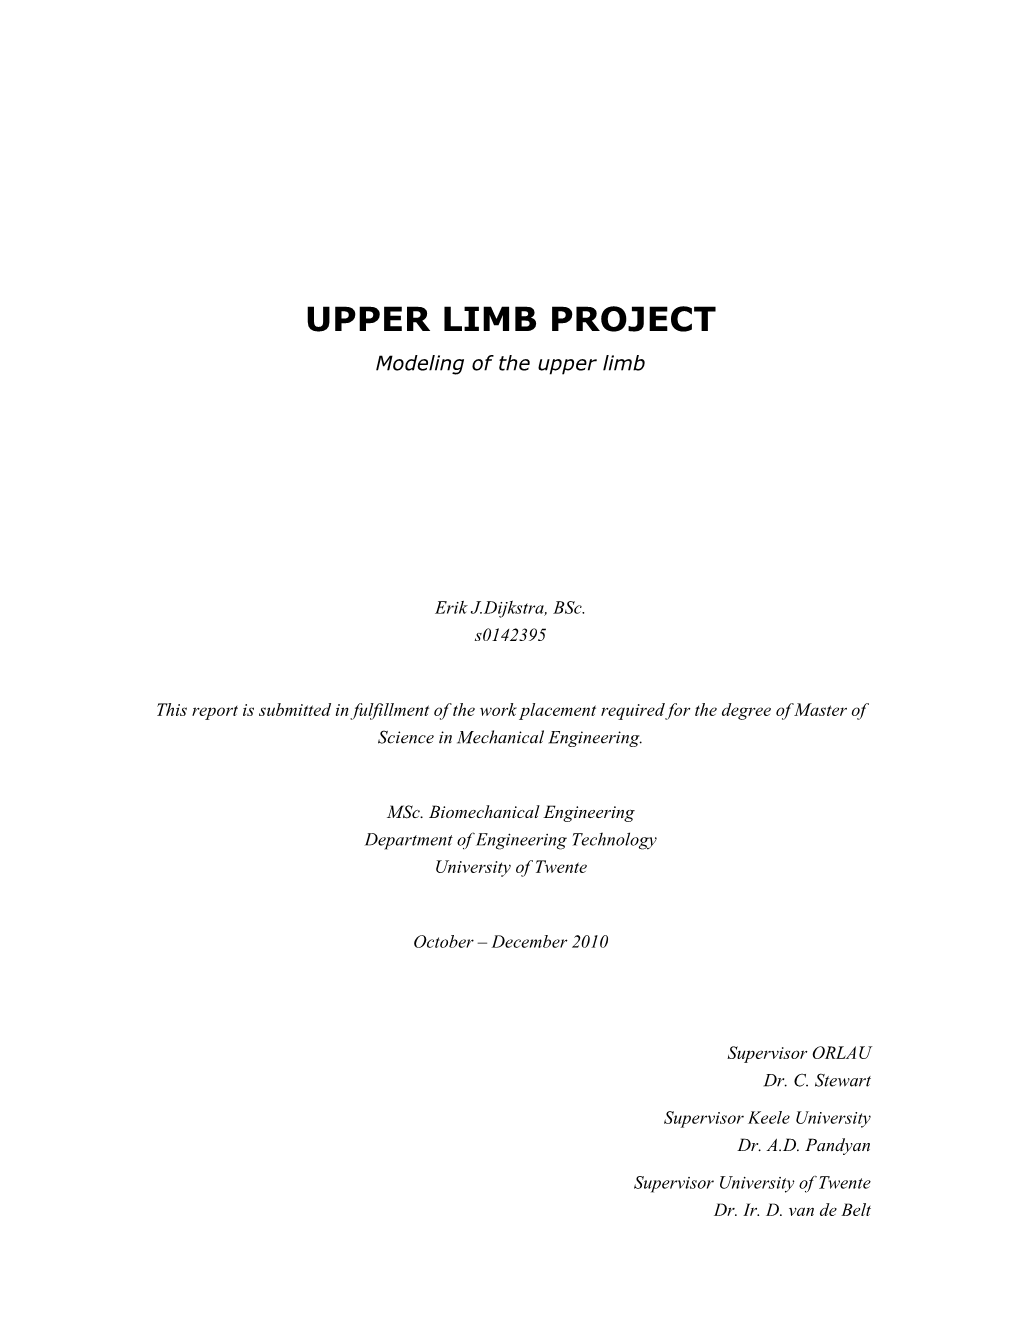 UPPER LIMB PROJECT Modeling of the Upper Limb